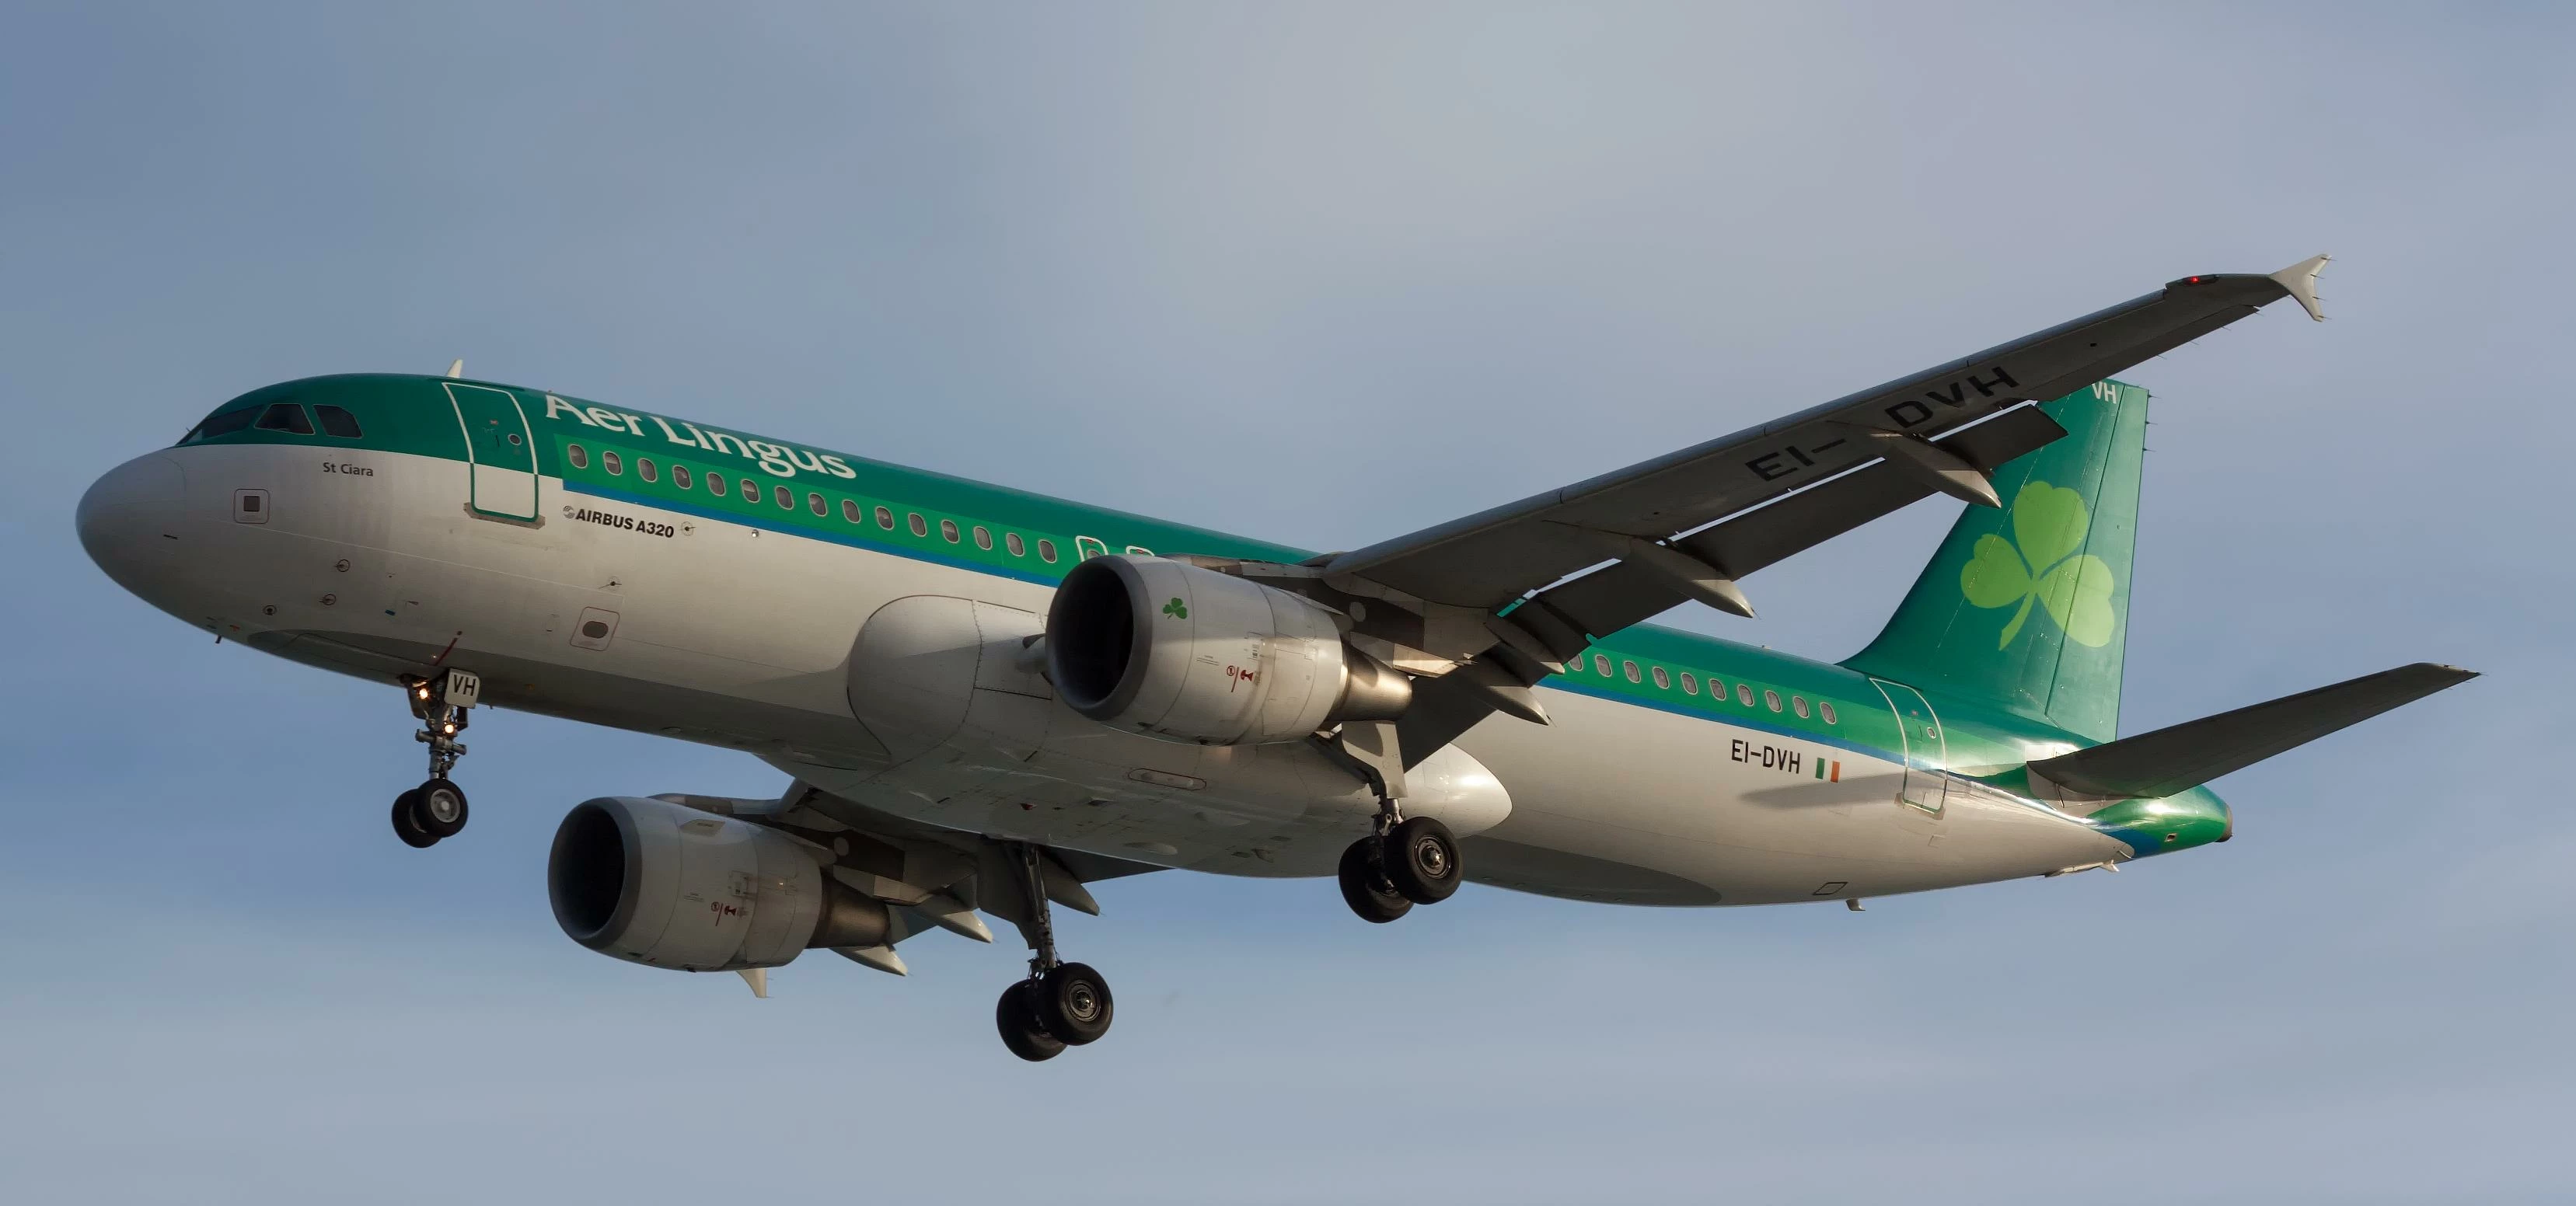 Aer Lingus A320 - EI-DVH